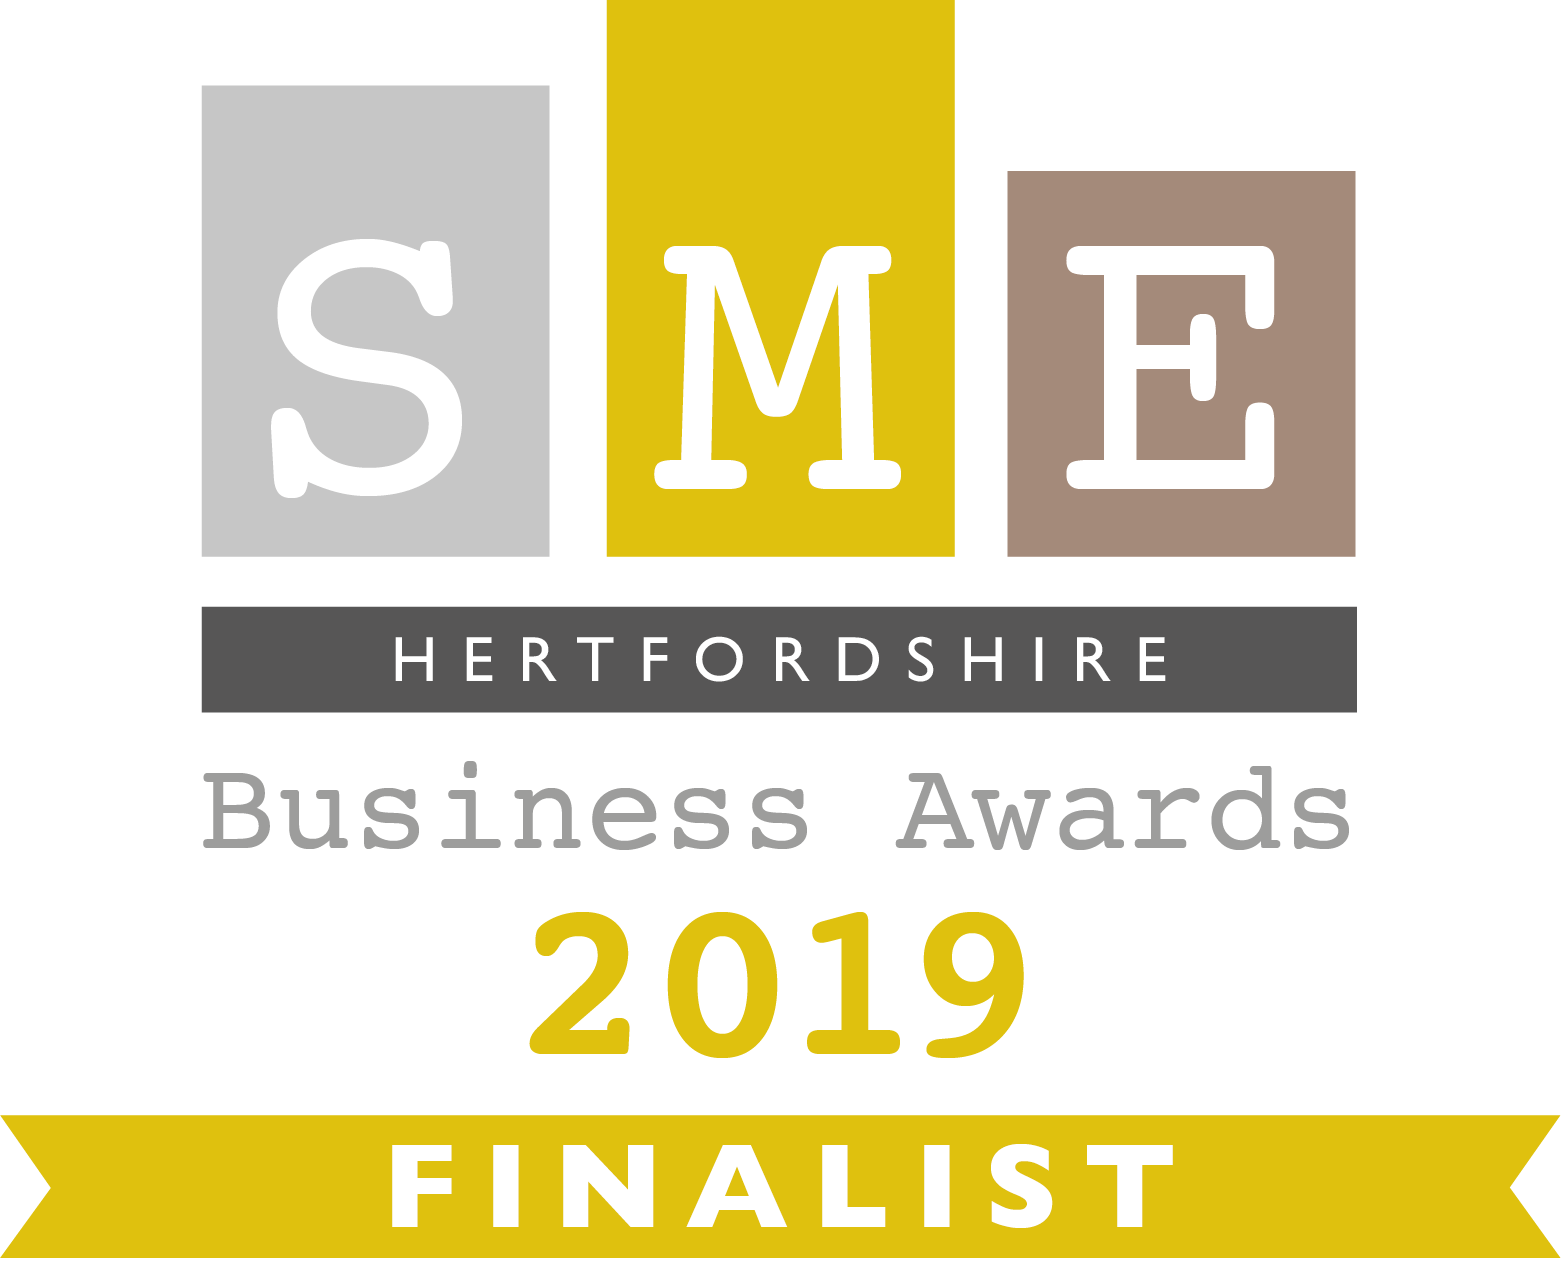 SME Herts Business Award_Finalist_2019